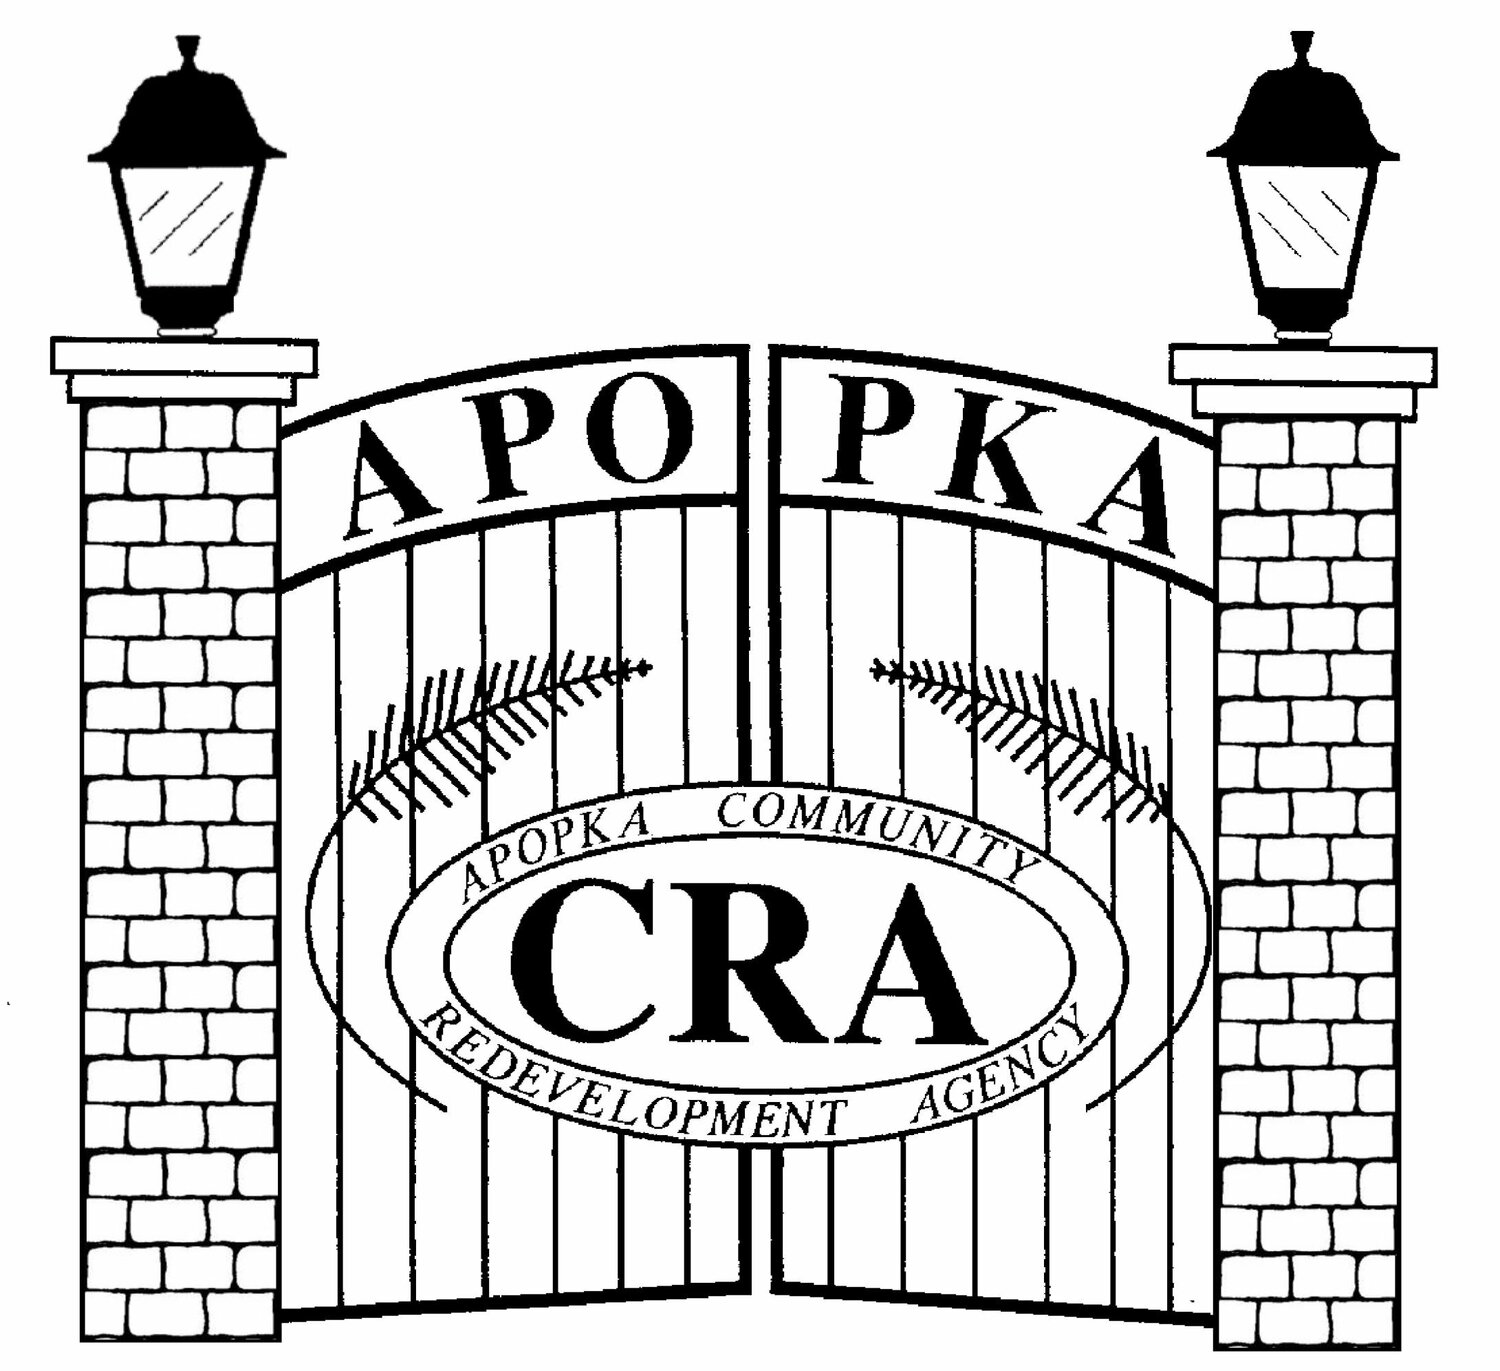 Commissioner Moore: More progress needed for Apopka's CRA to be renewed ...